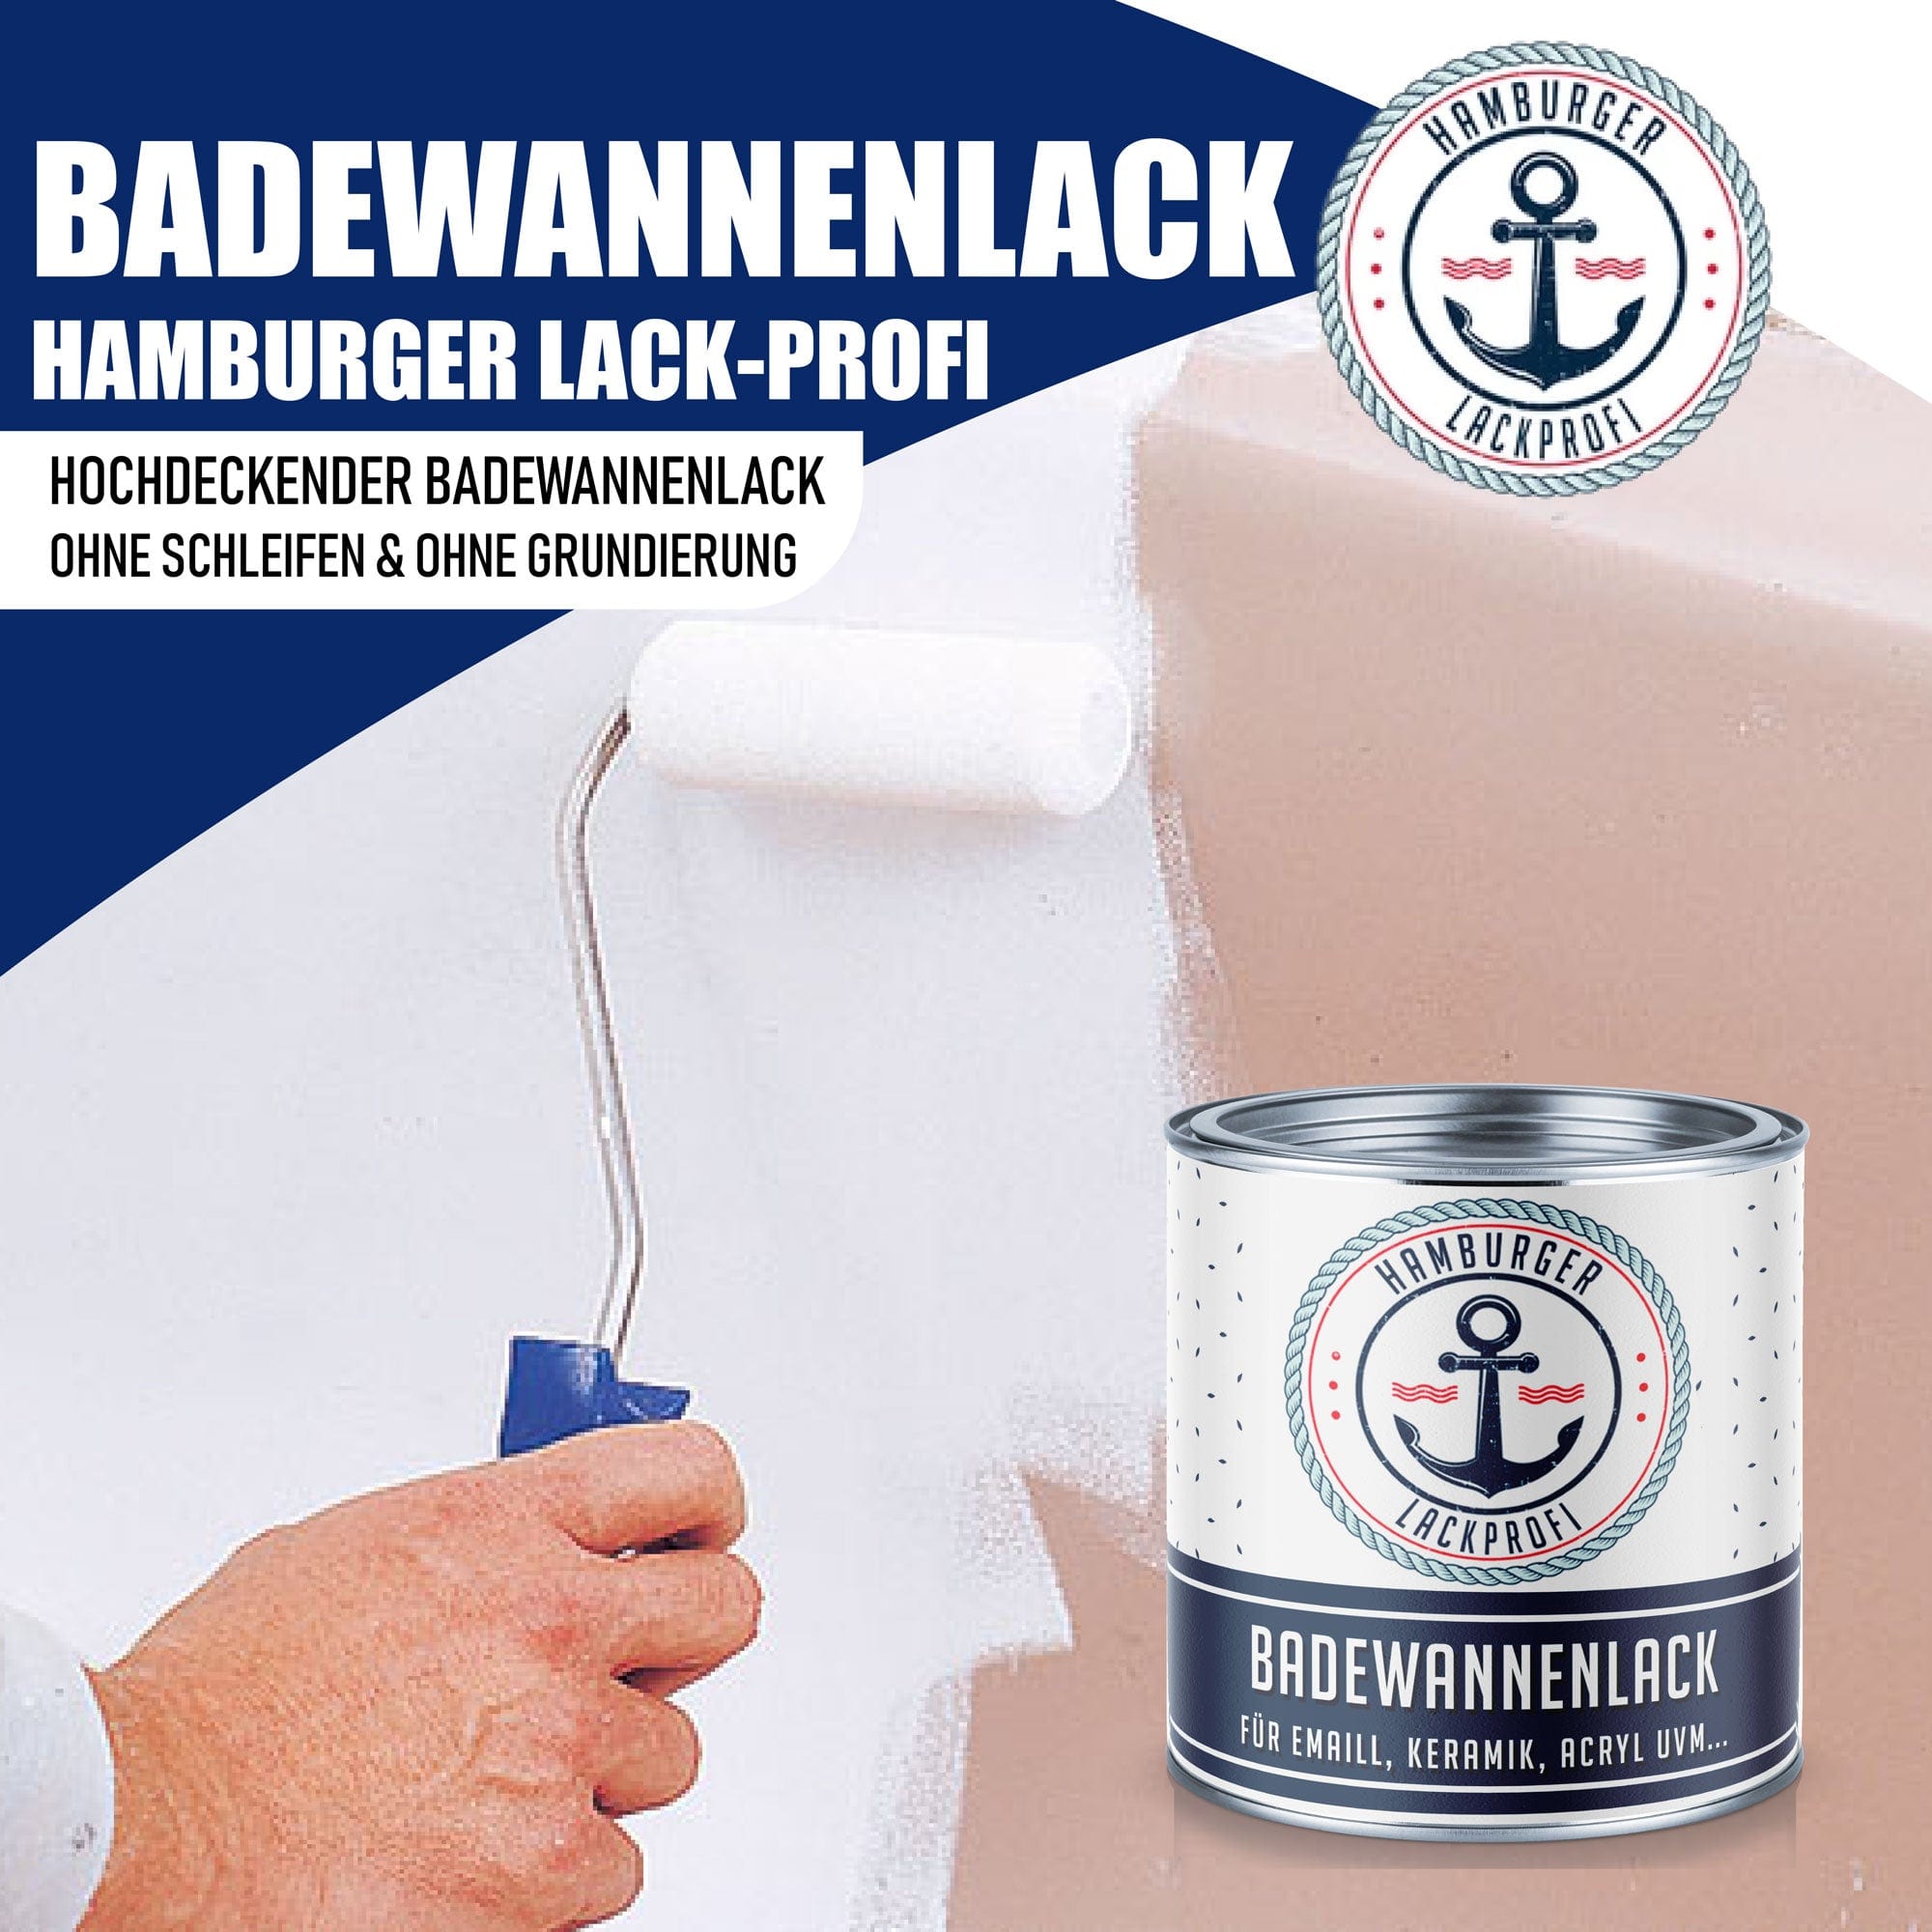 Hamburger Lack-Profi Badewannenlack Hamburger Lack-Profi 2K Badewannenlack Telegrau 4 RAL 7047 - Glänzend / Seidenmatt / Matt